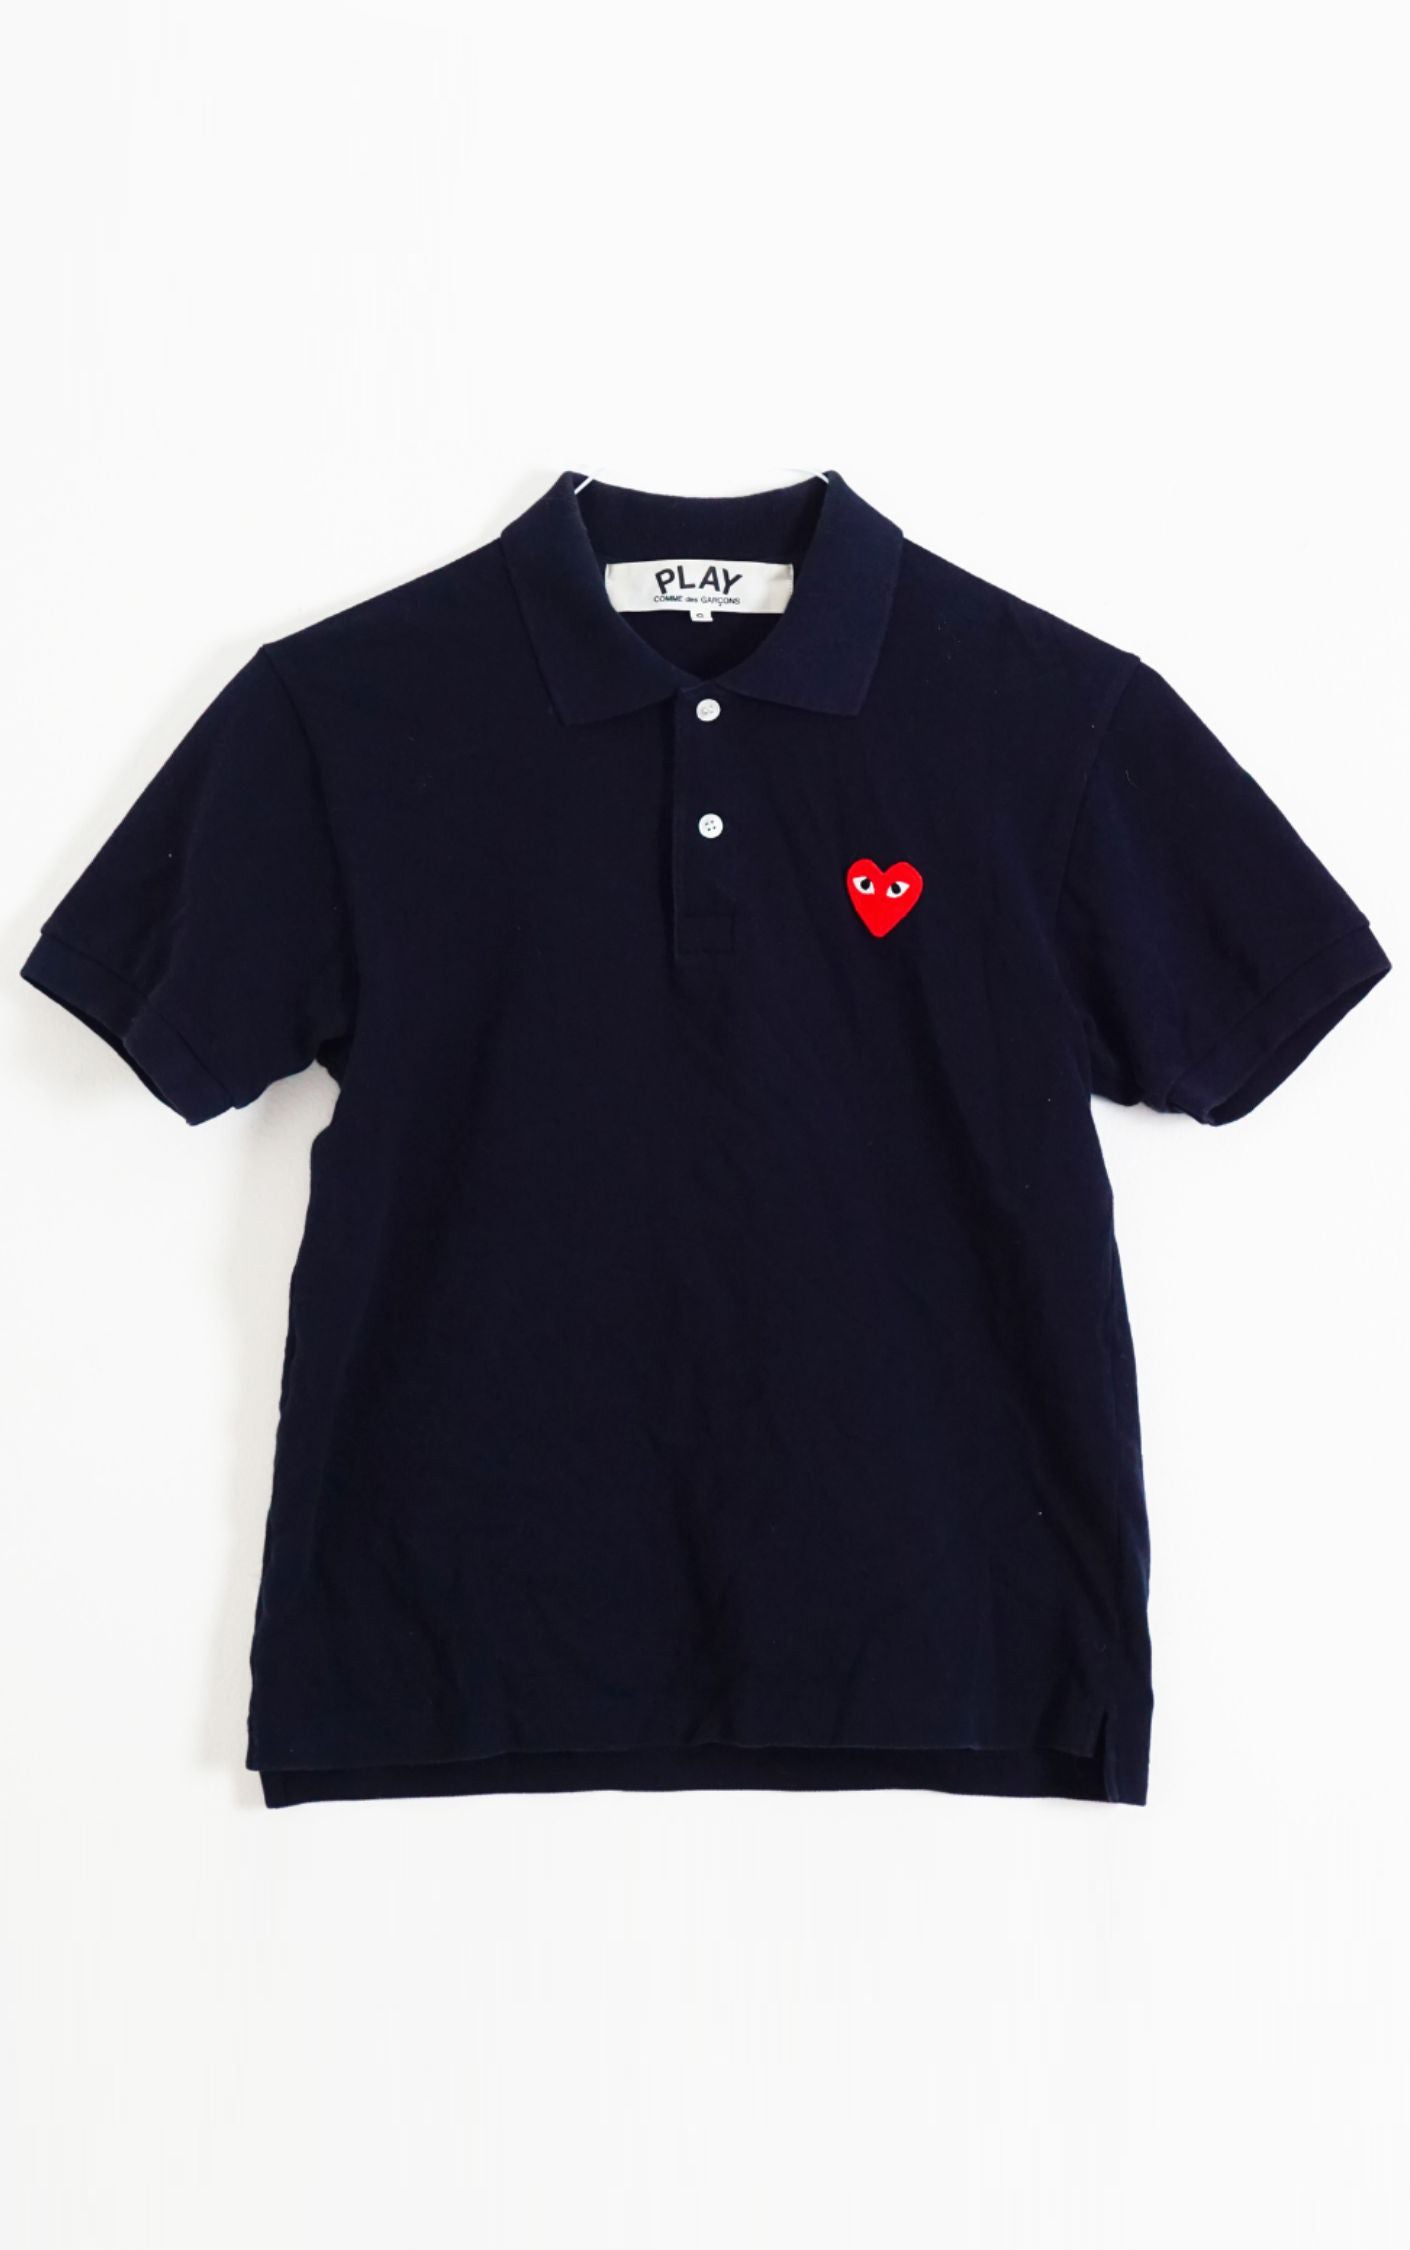 COMME DES GARCONS Play Heart T-Shirt resellum